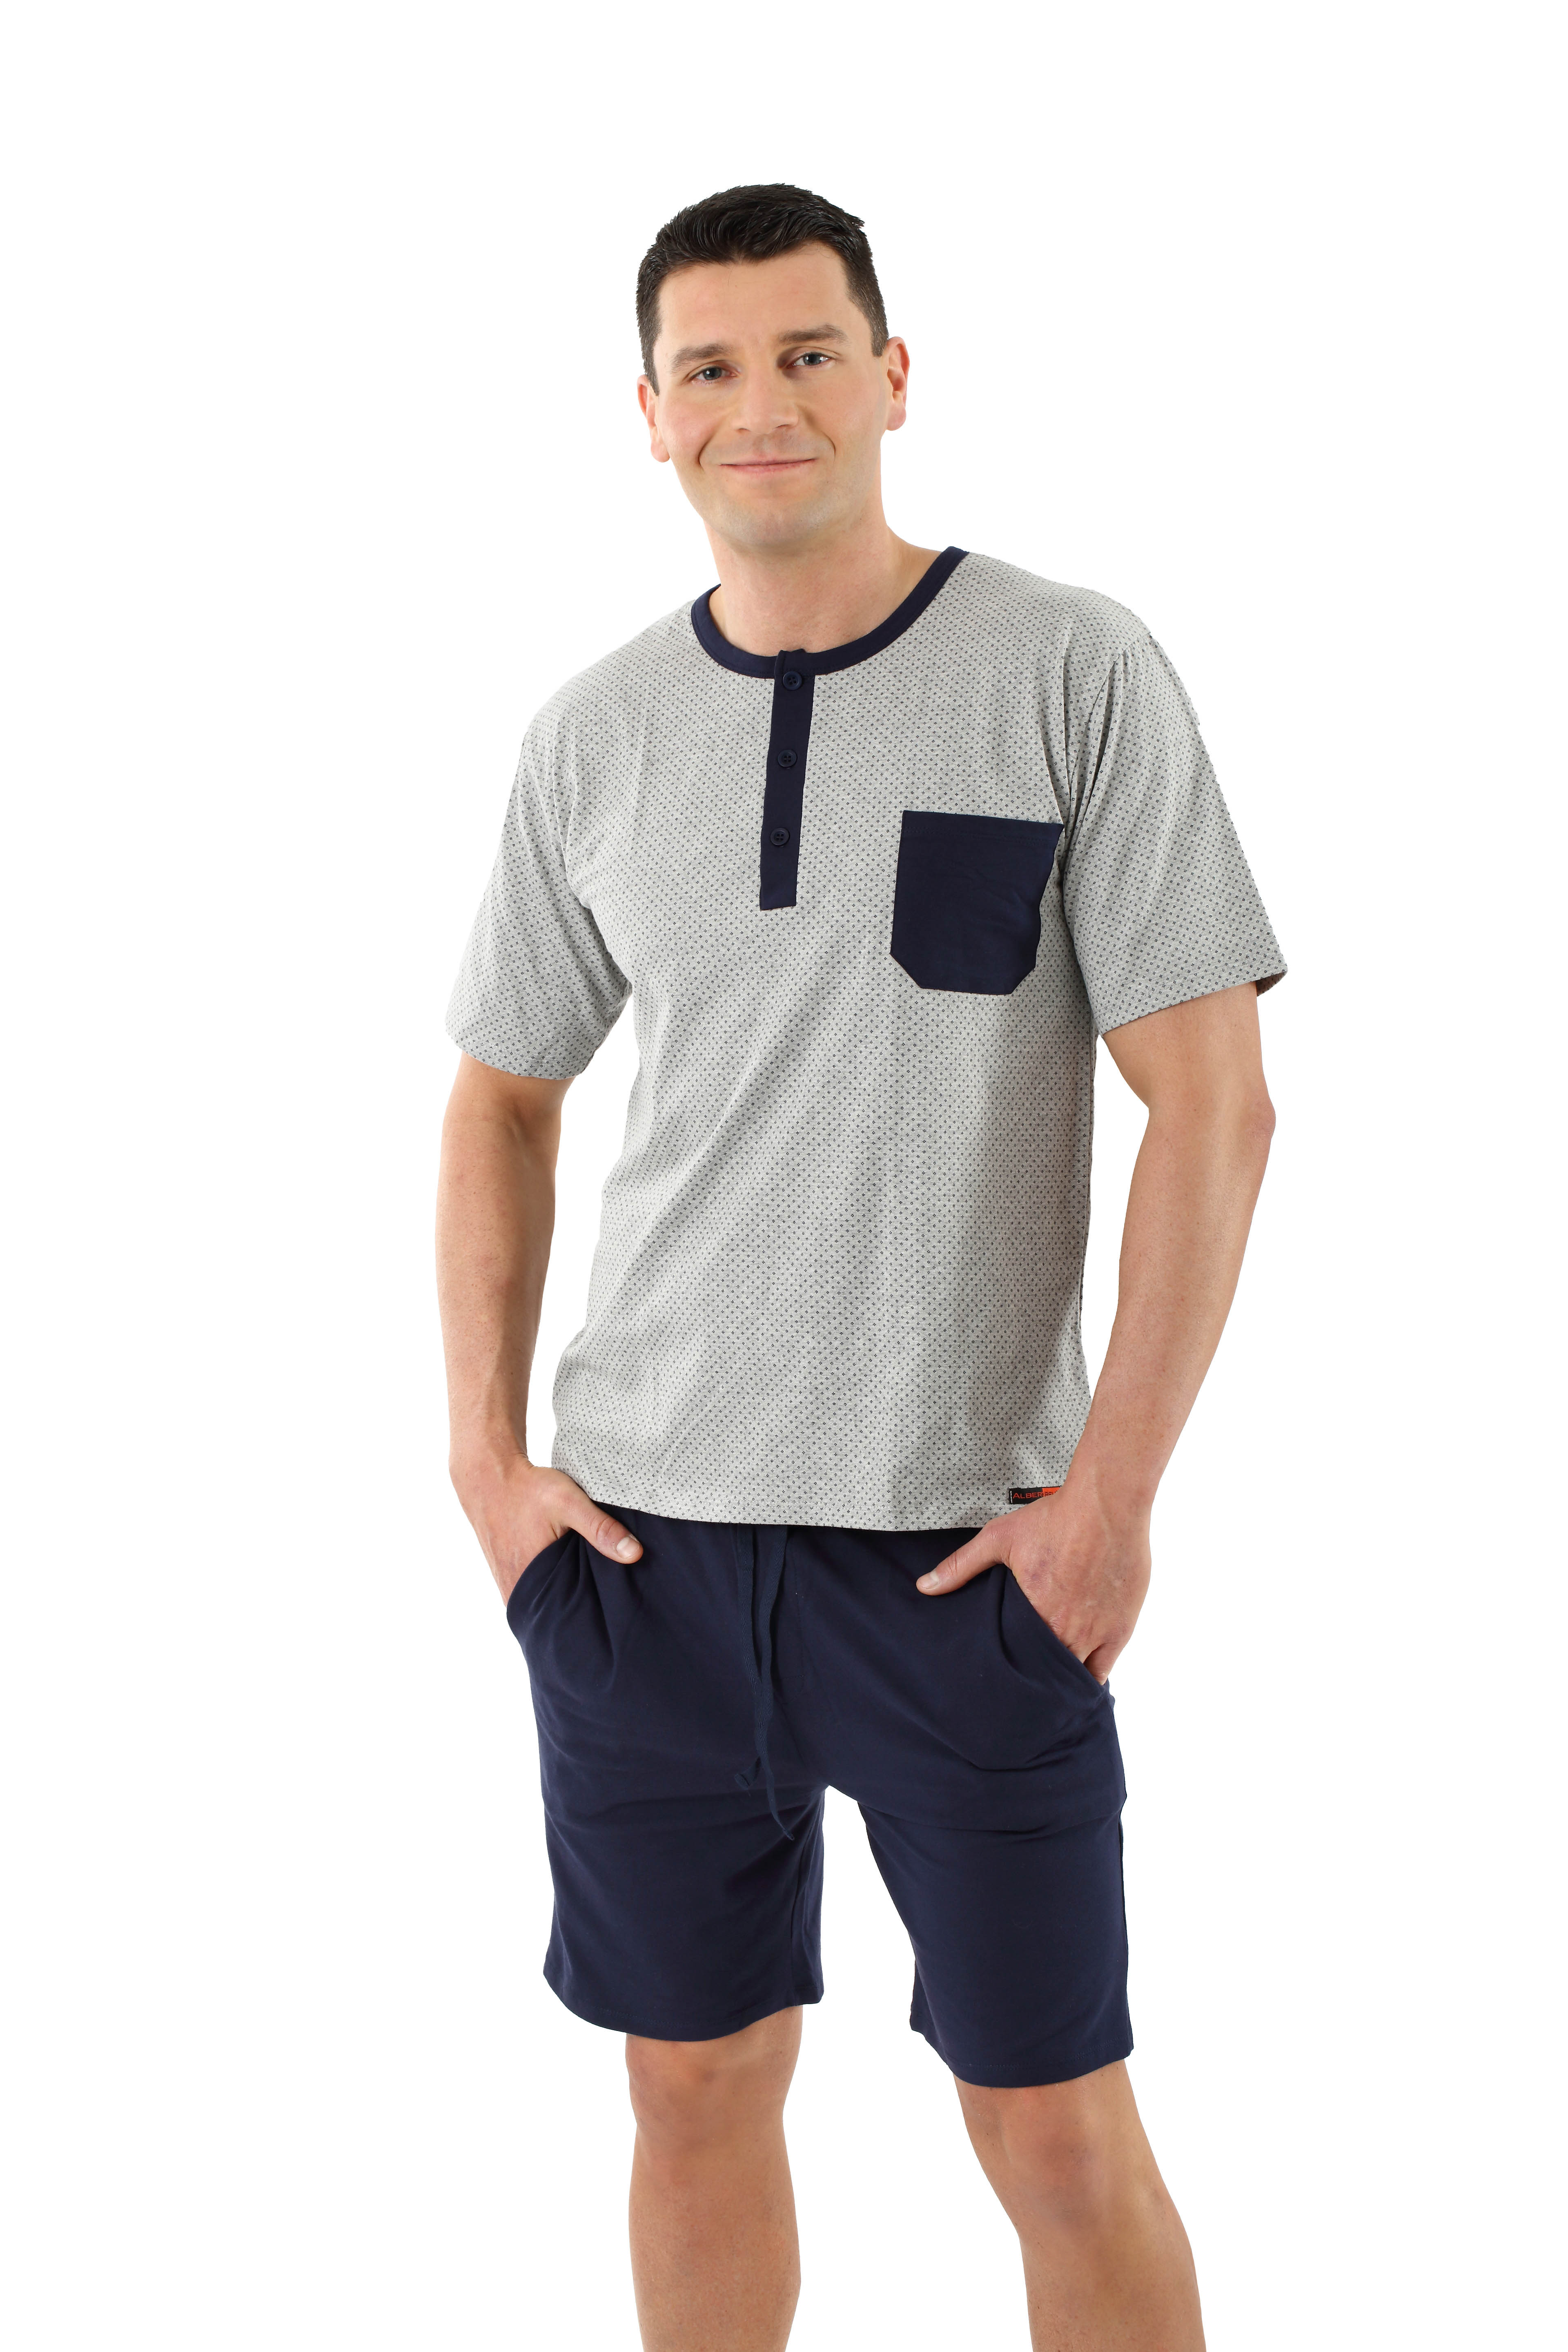 ALBERT KREUZ  Men's pajamas with short sleeves and short pants stretch  cotton, navy blue-gray